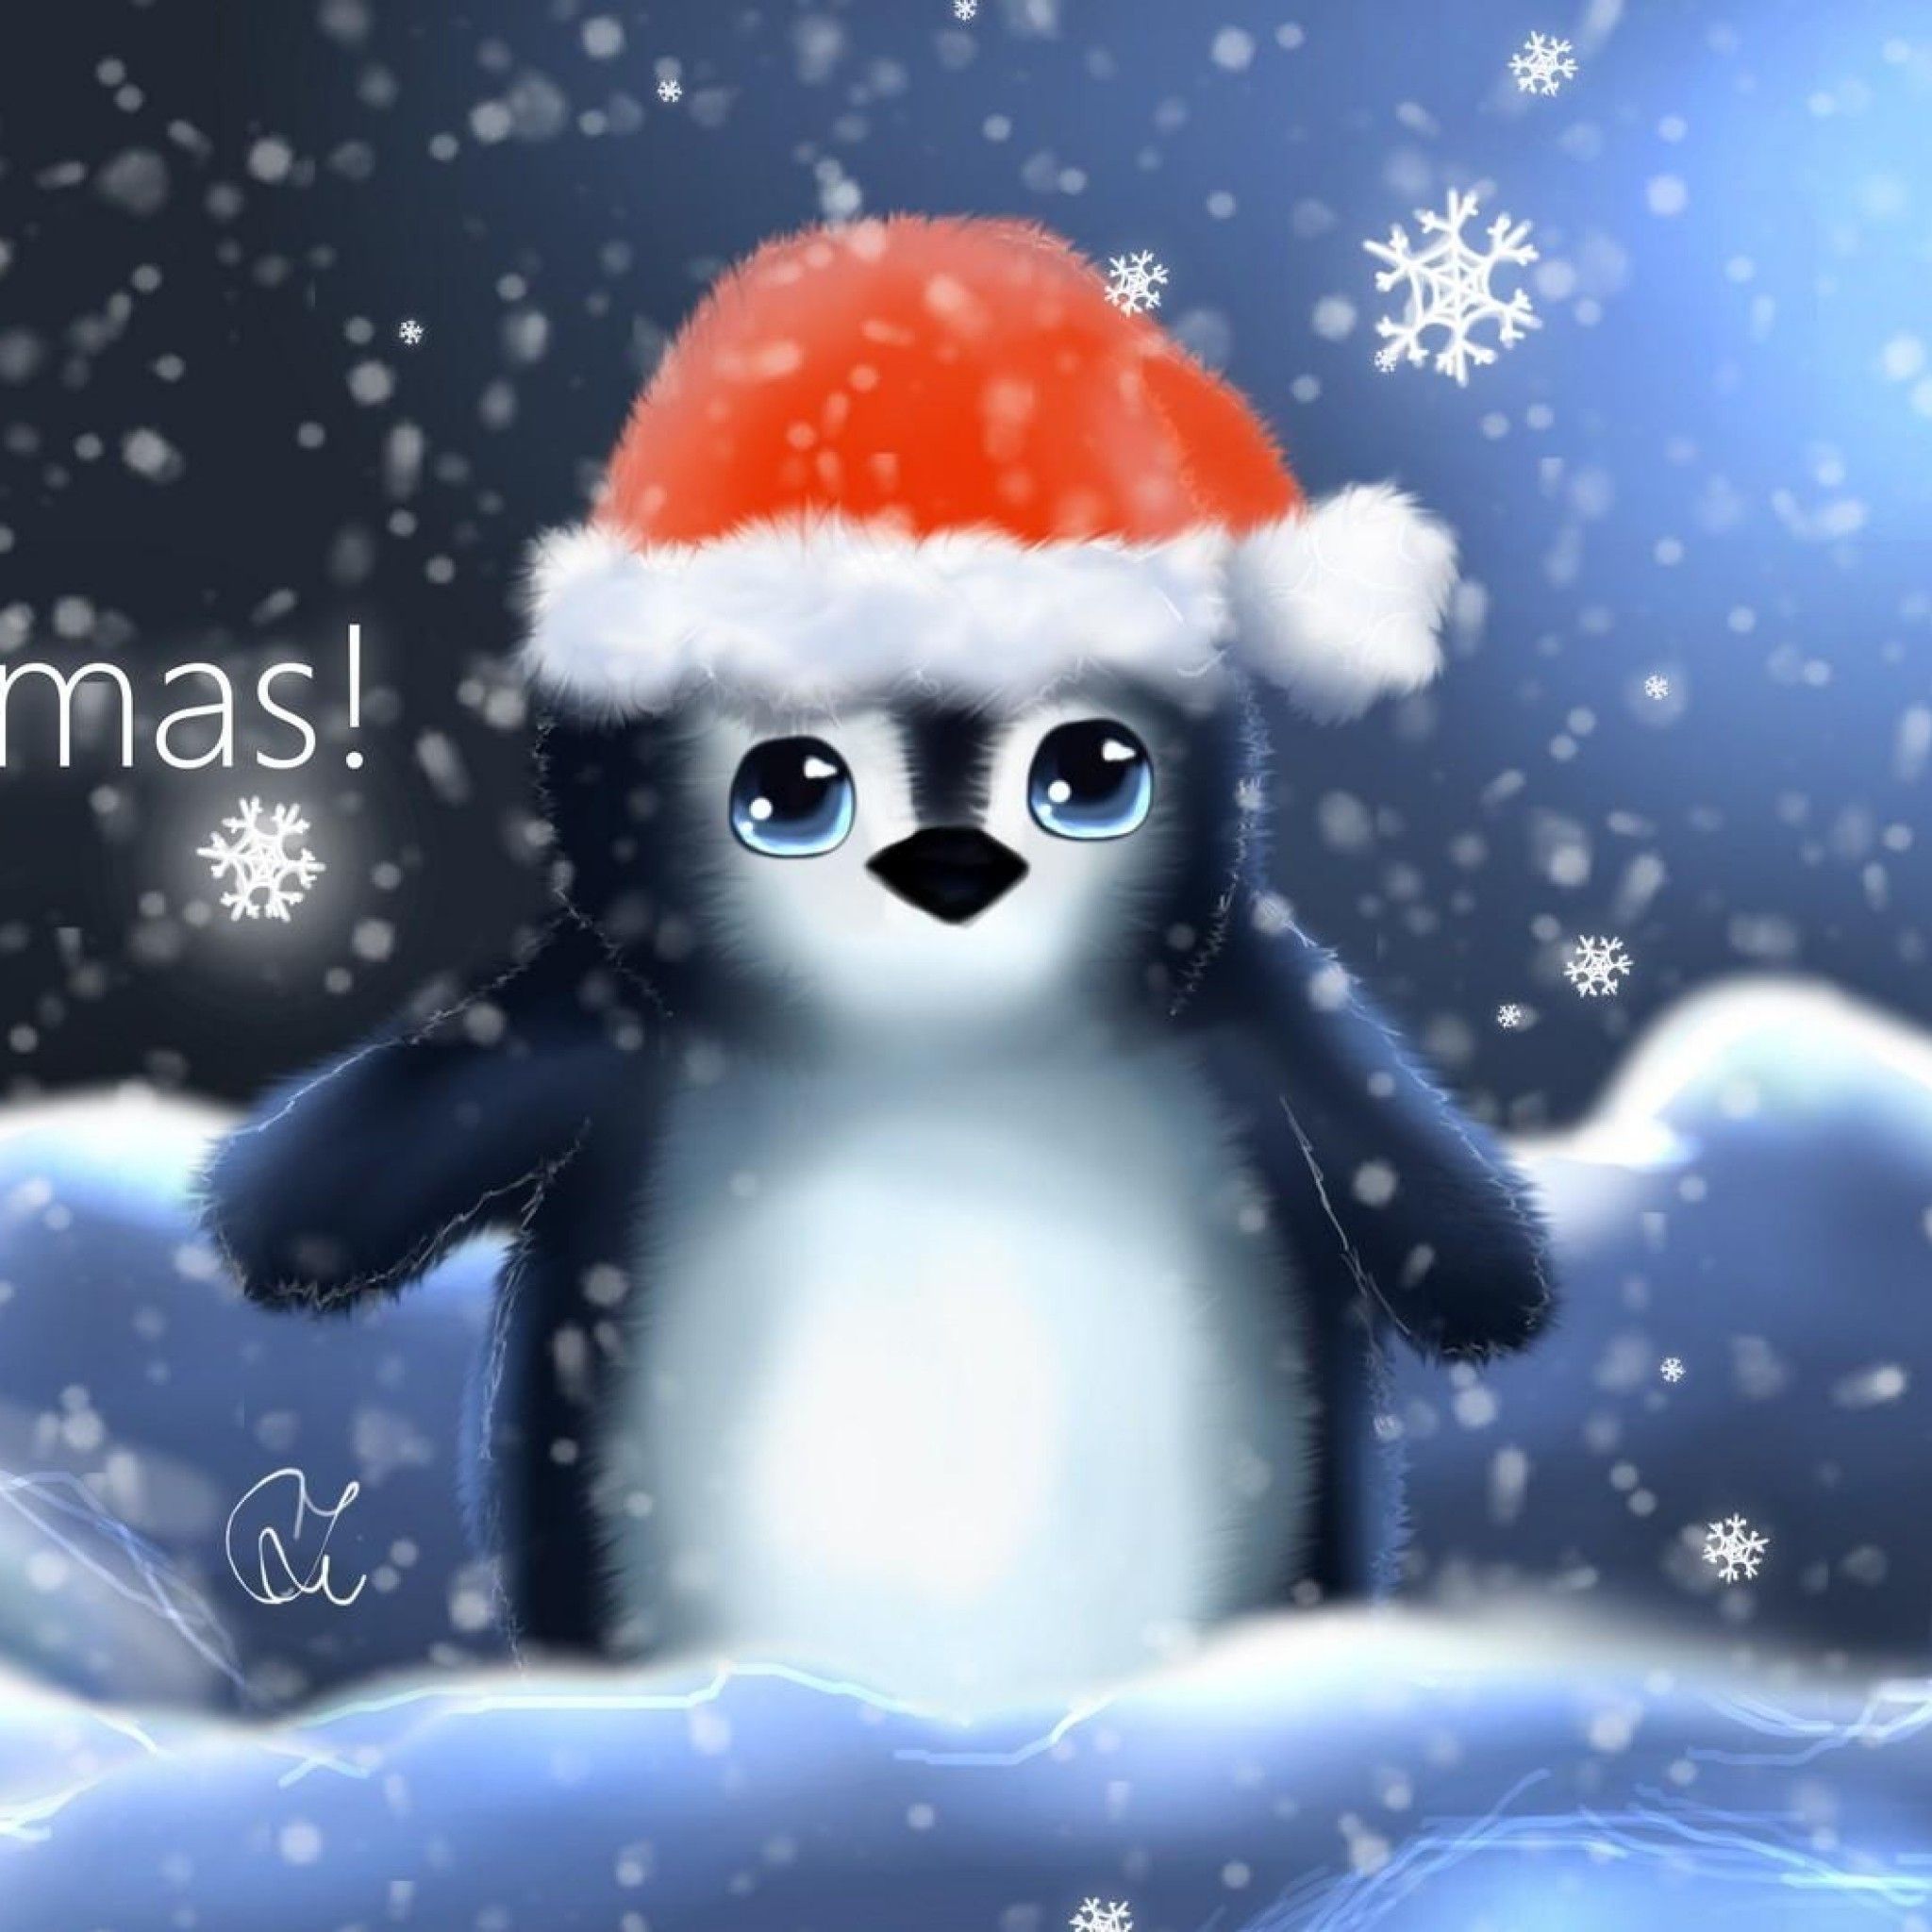 Cute Christmas Penguin Wallpapers